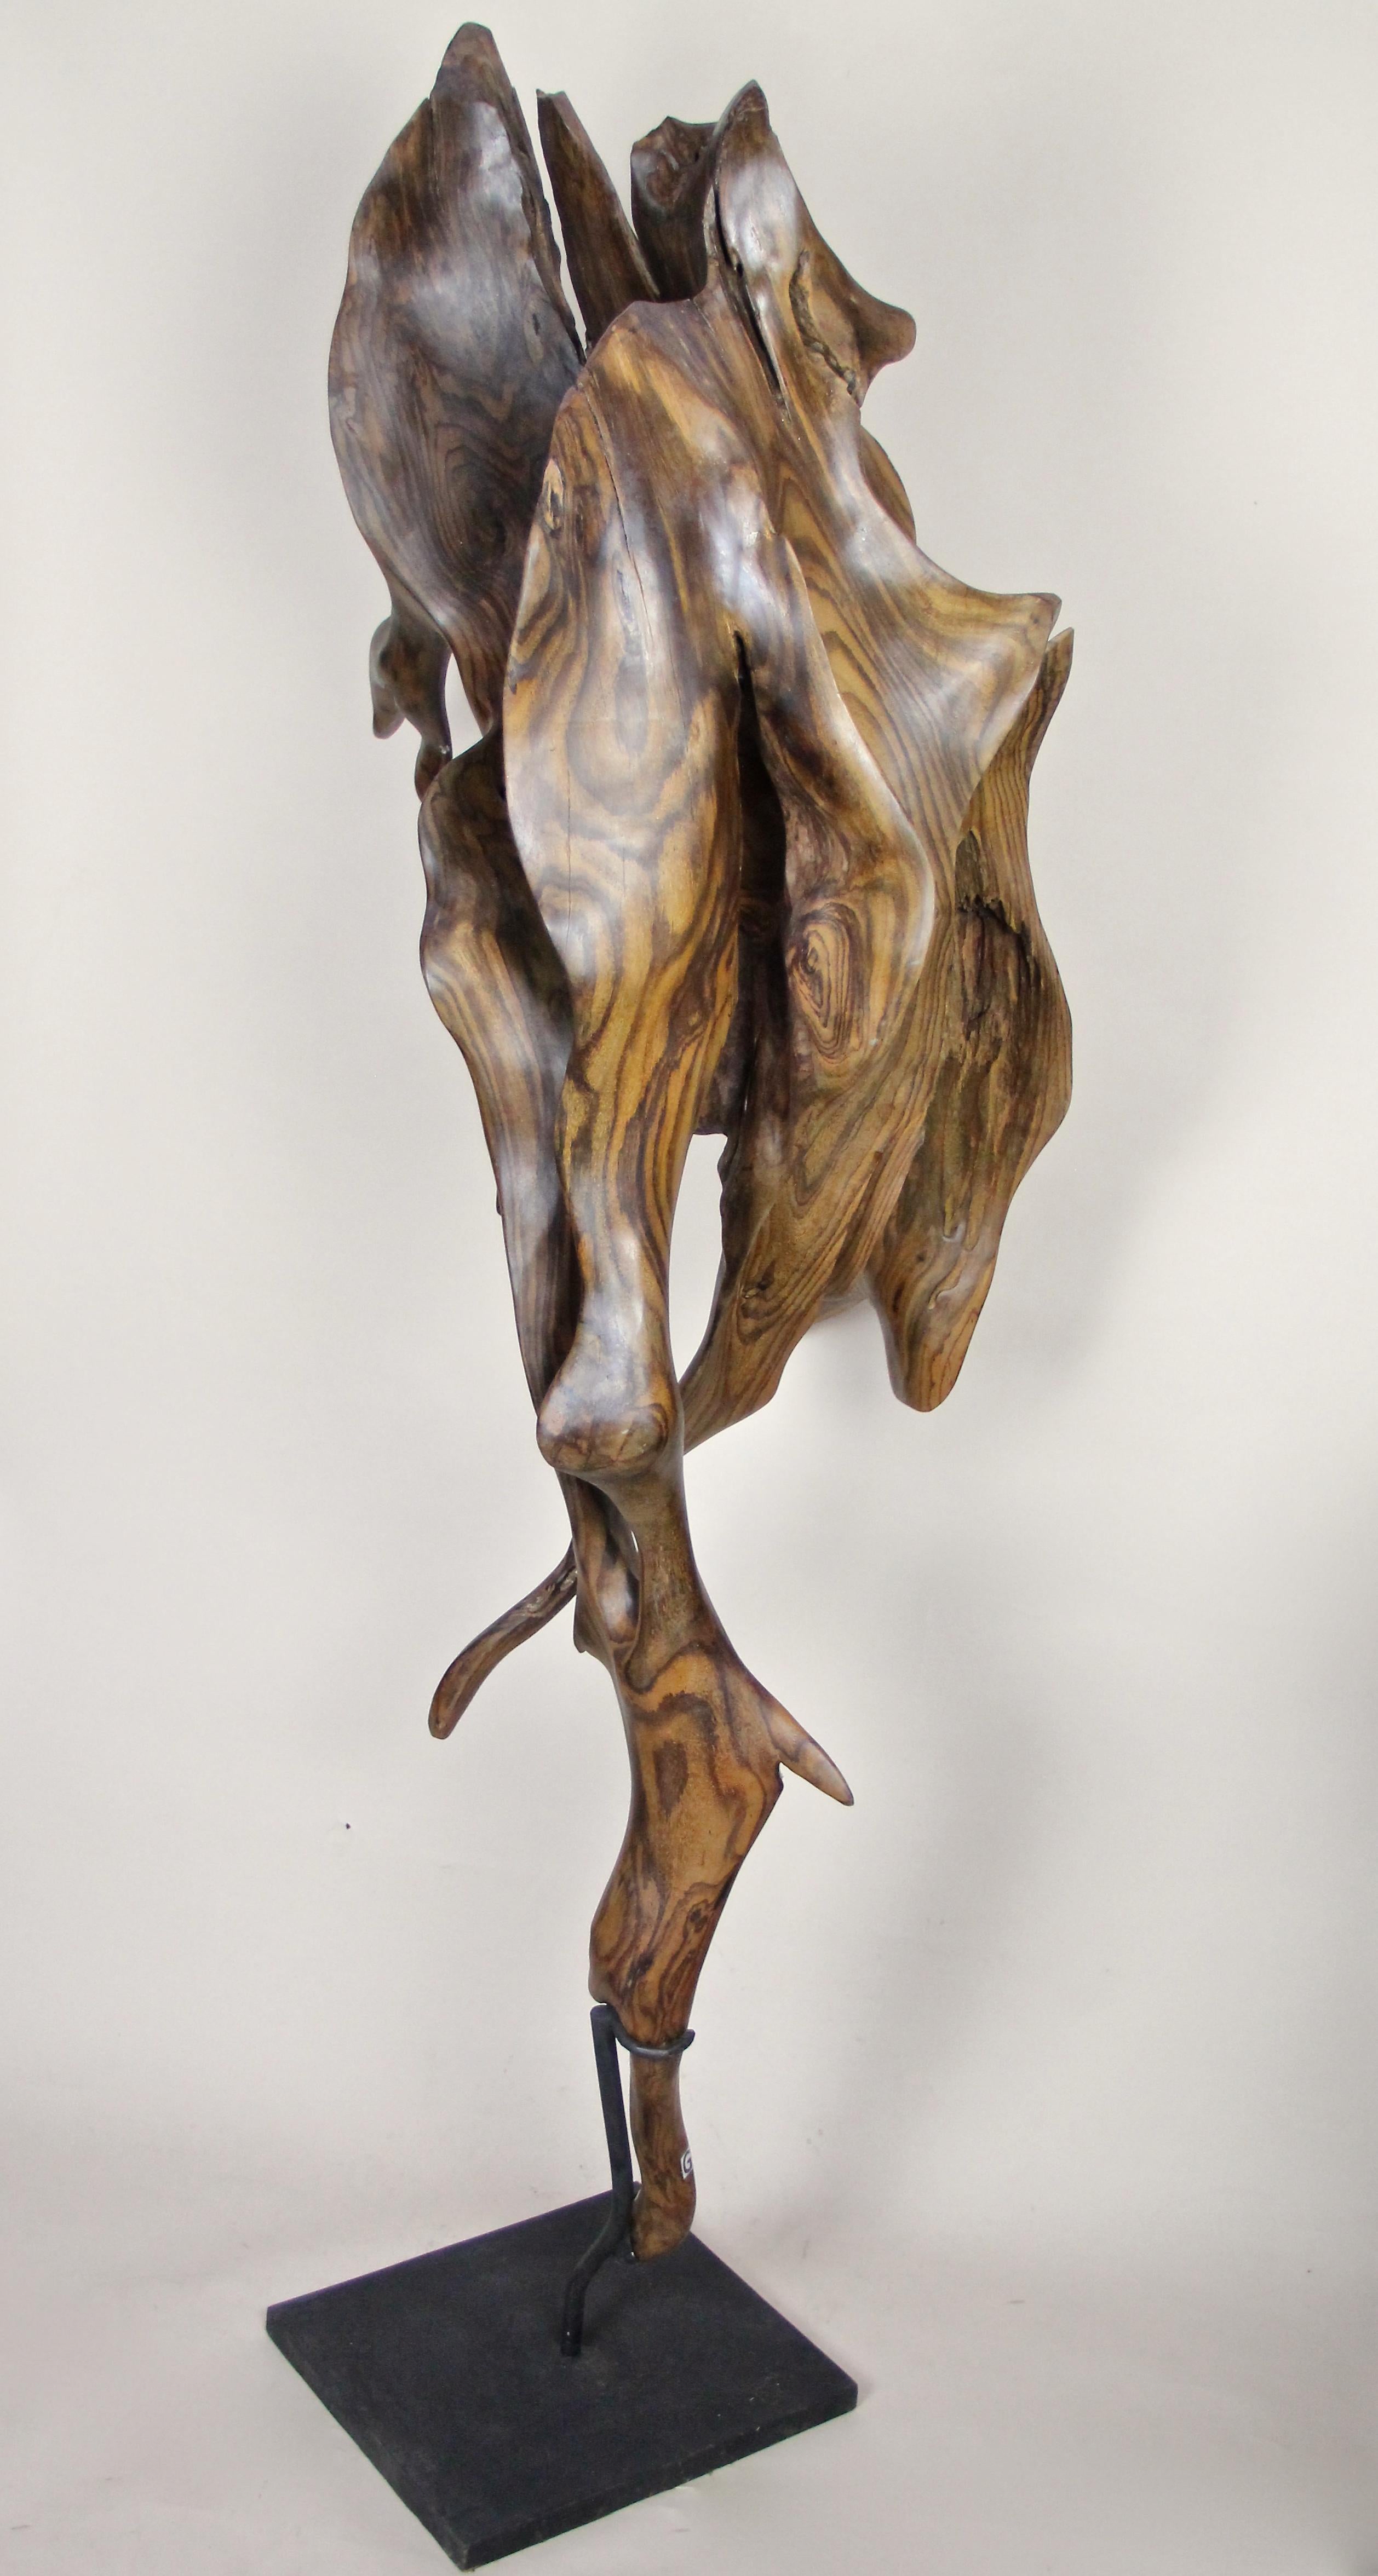 Abstract Organic Sonokeling Wood Root Sculpture on Mat Black Metal Stand 1